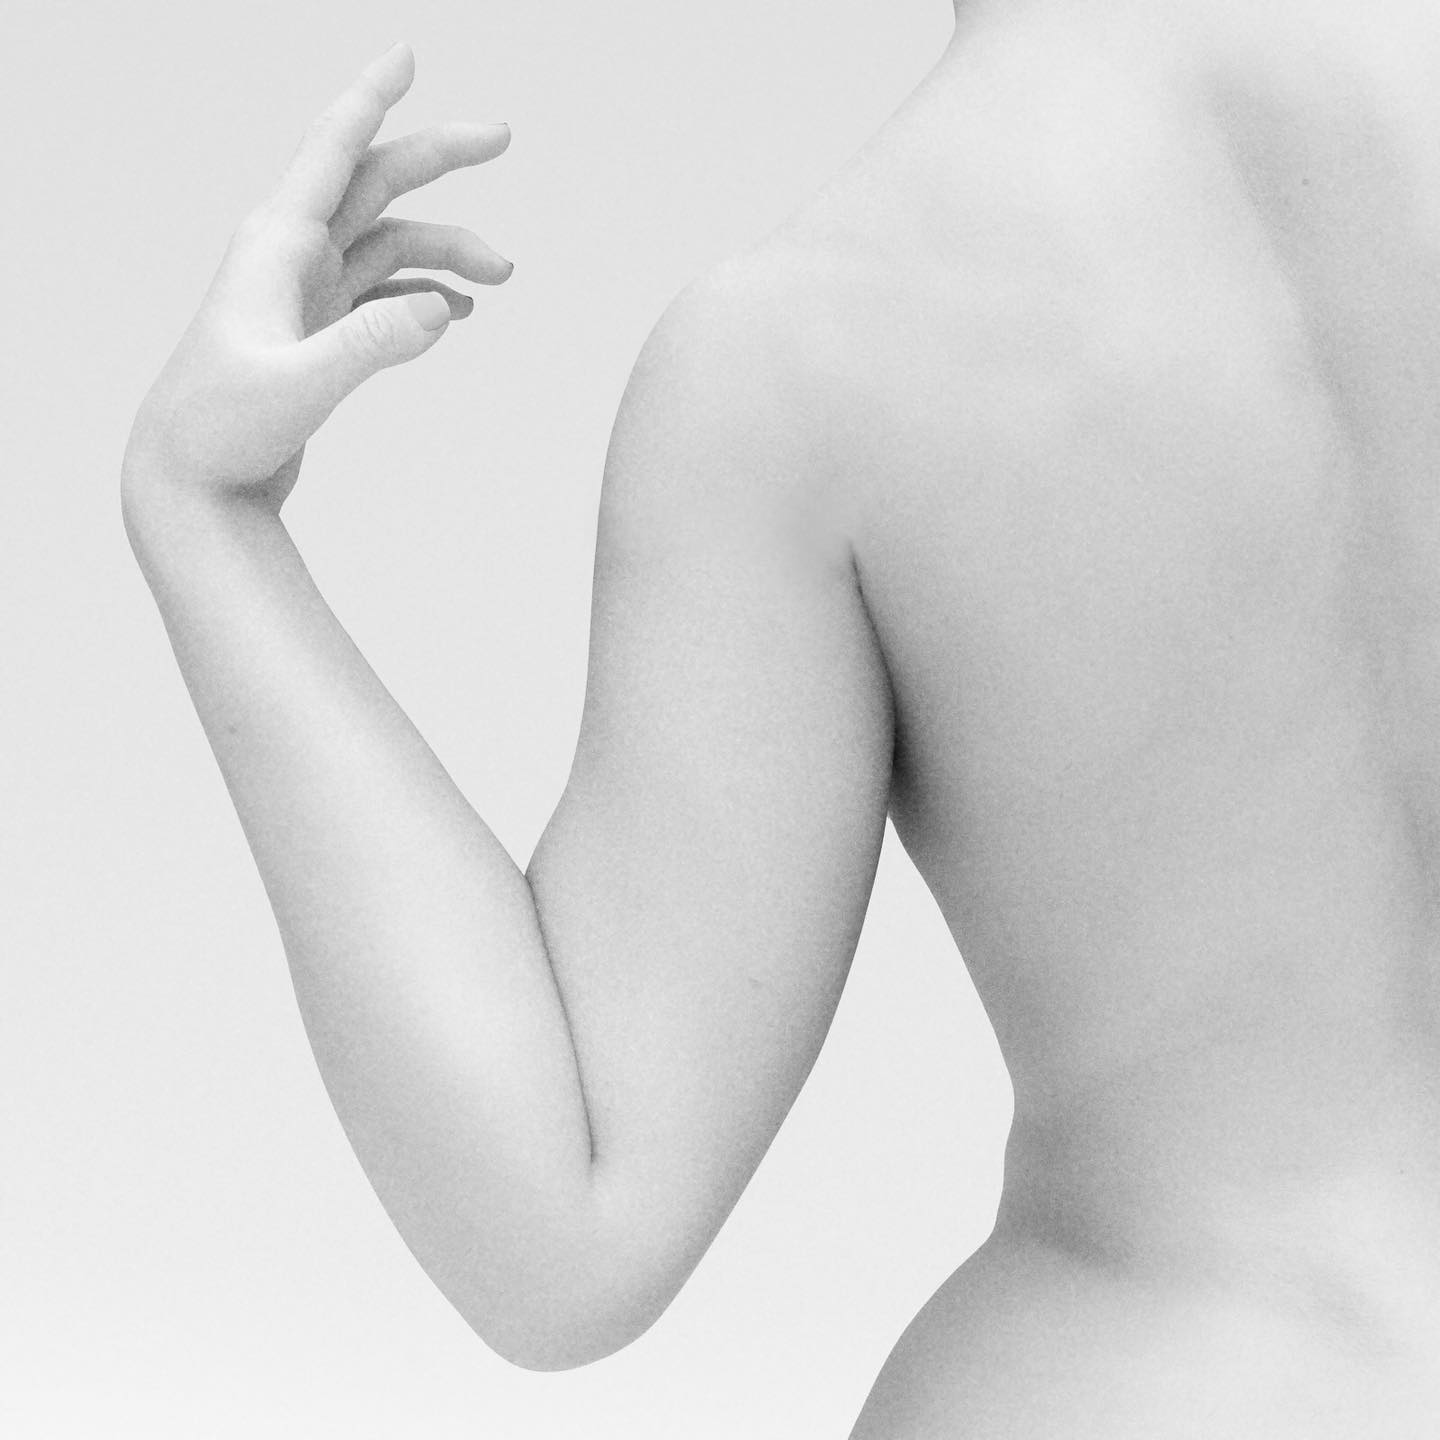 Black & White aesthetic
——
#woman #body #skin #cinema4d #rendering #mgcollective #mdcommunity #plsur #xuxoe #howiseedatw